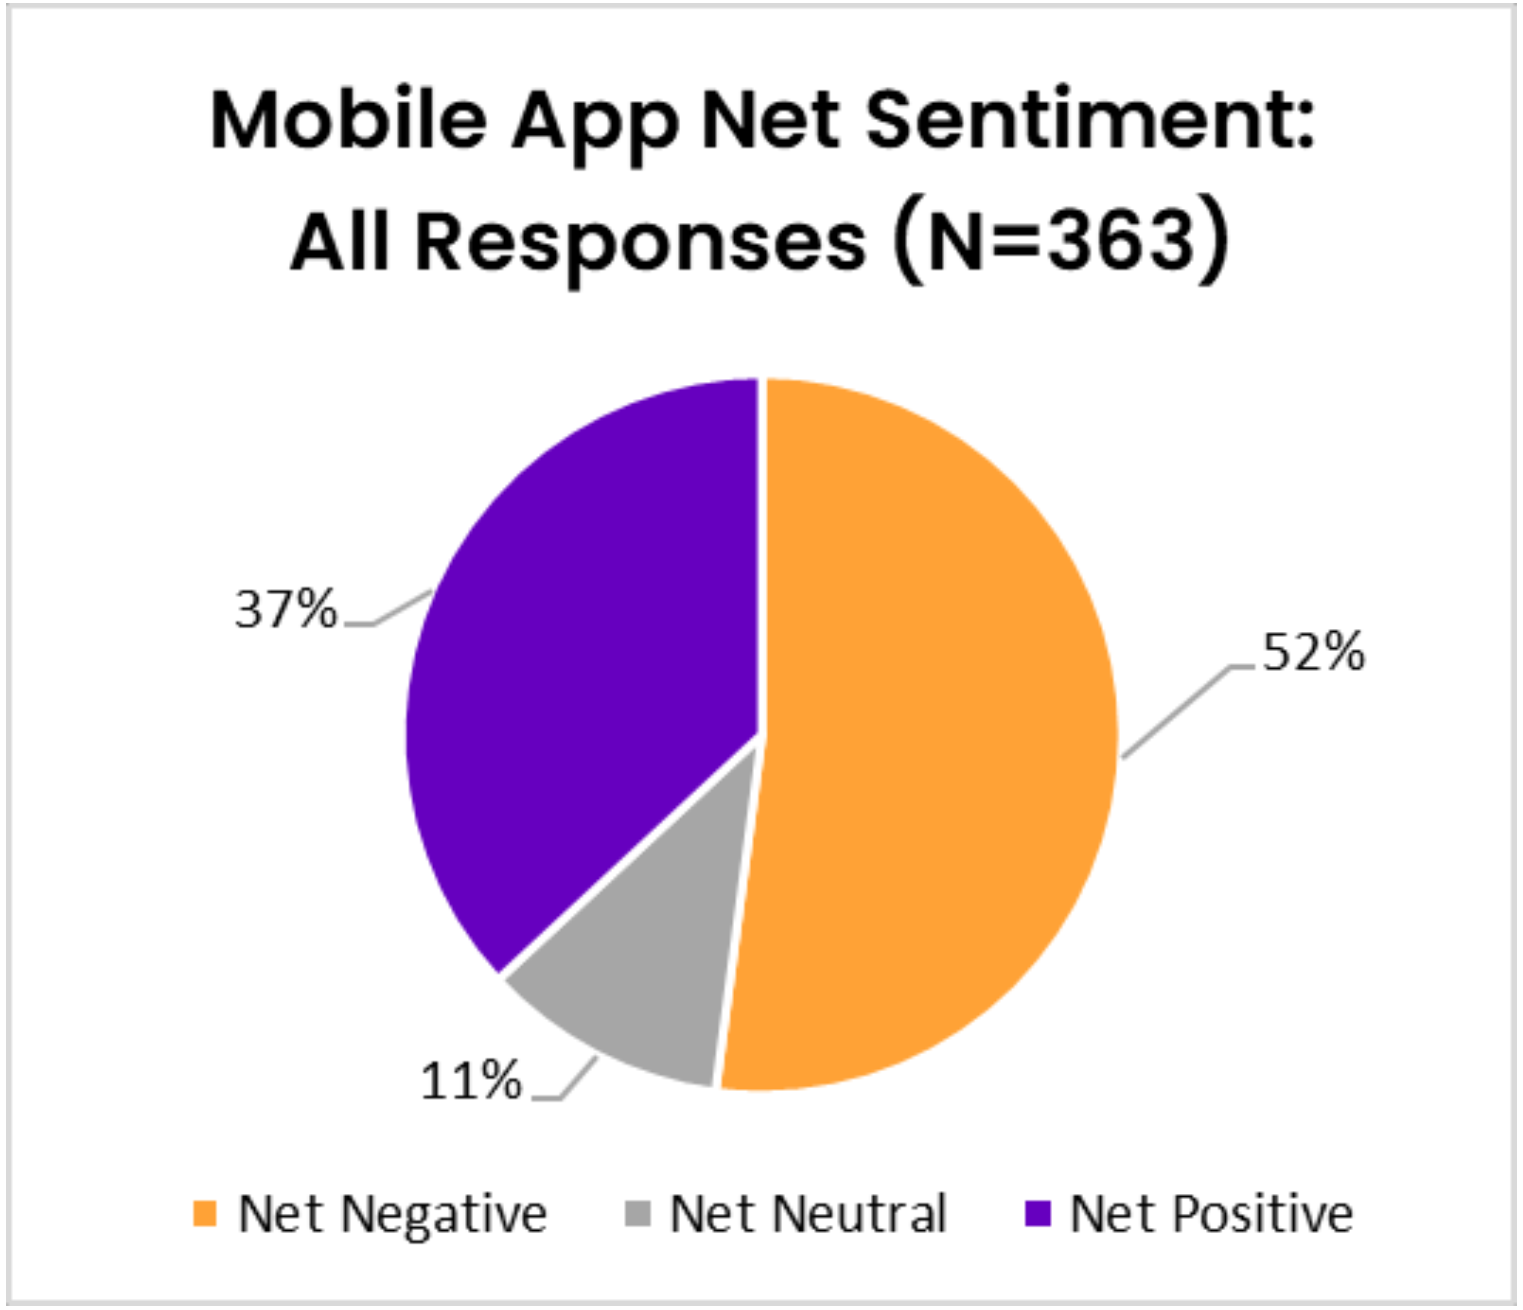 Figure 4- Mobile App Net Sentiment